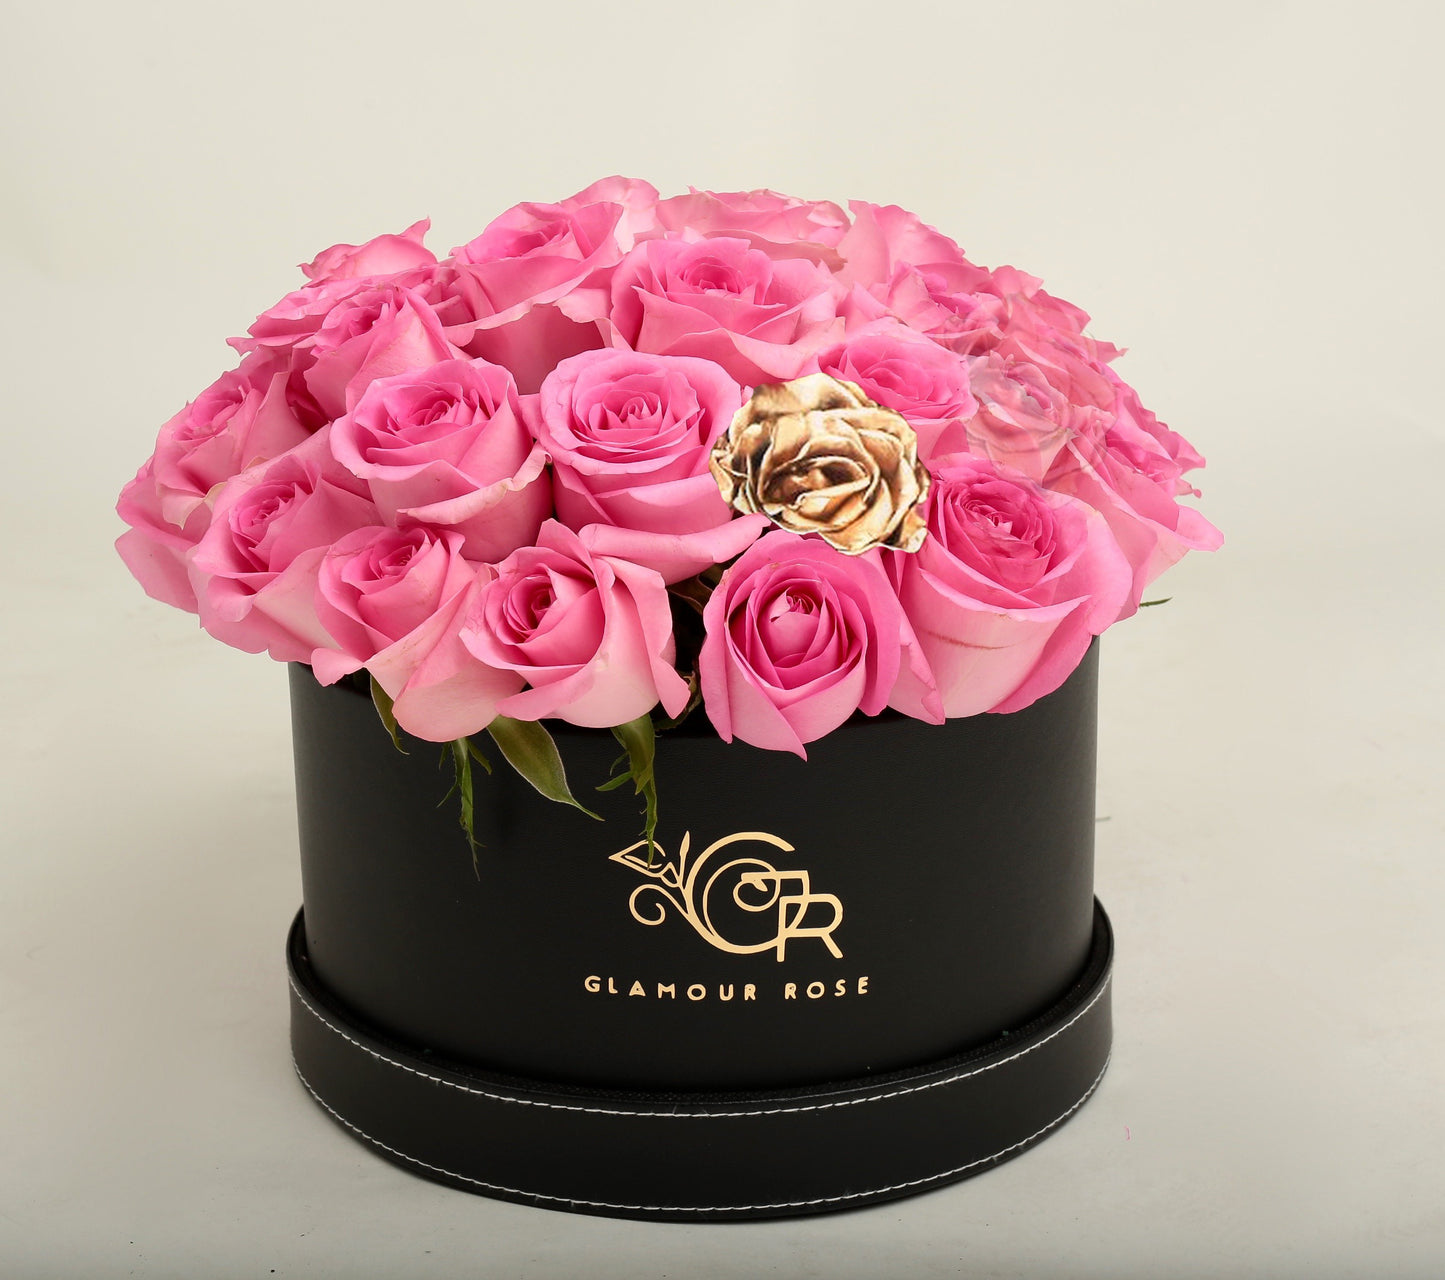 Eternal Beauty - Glamour Rose